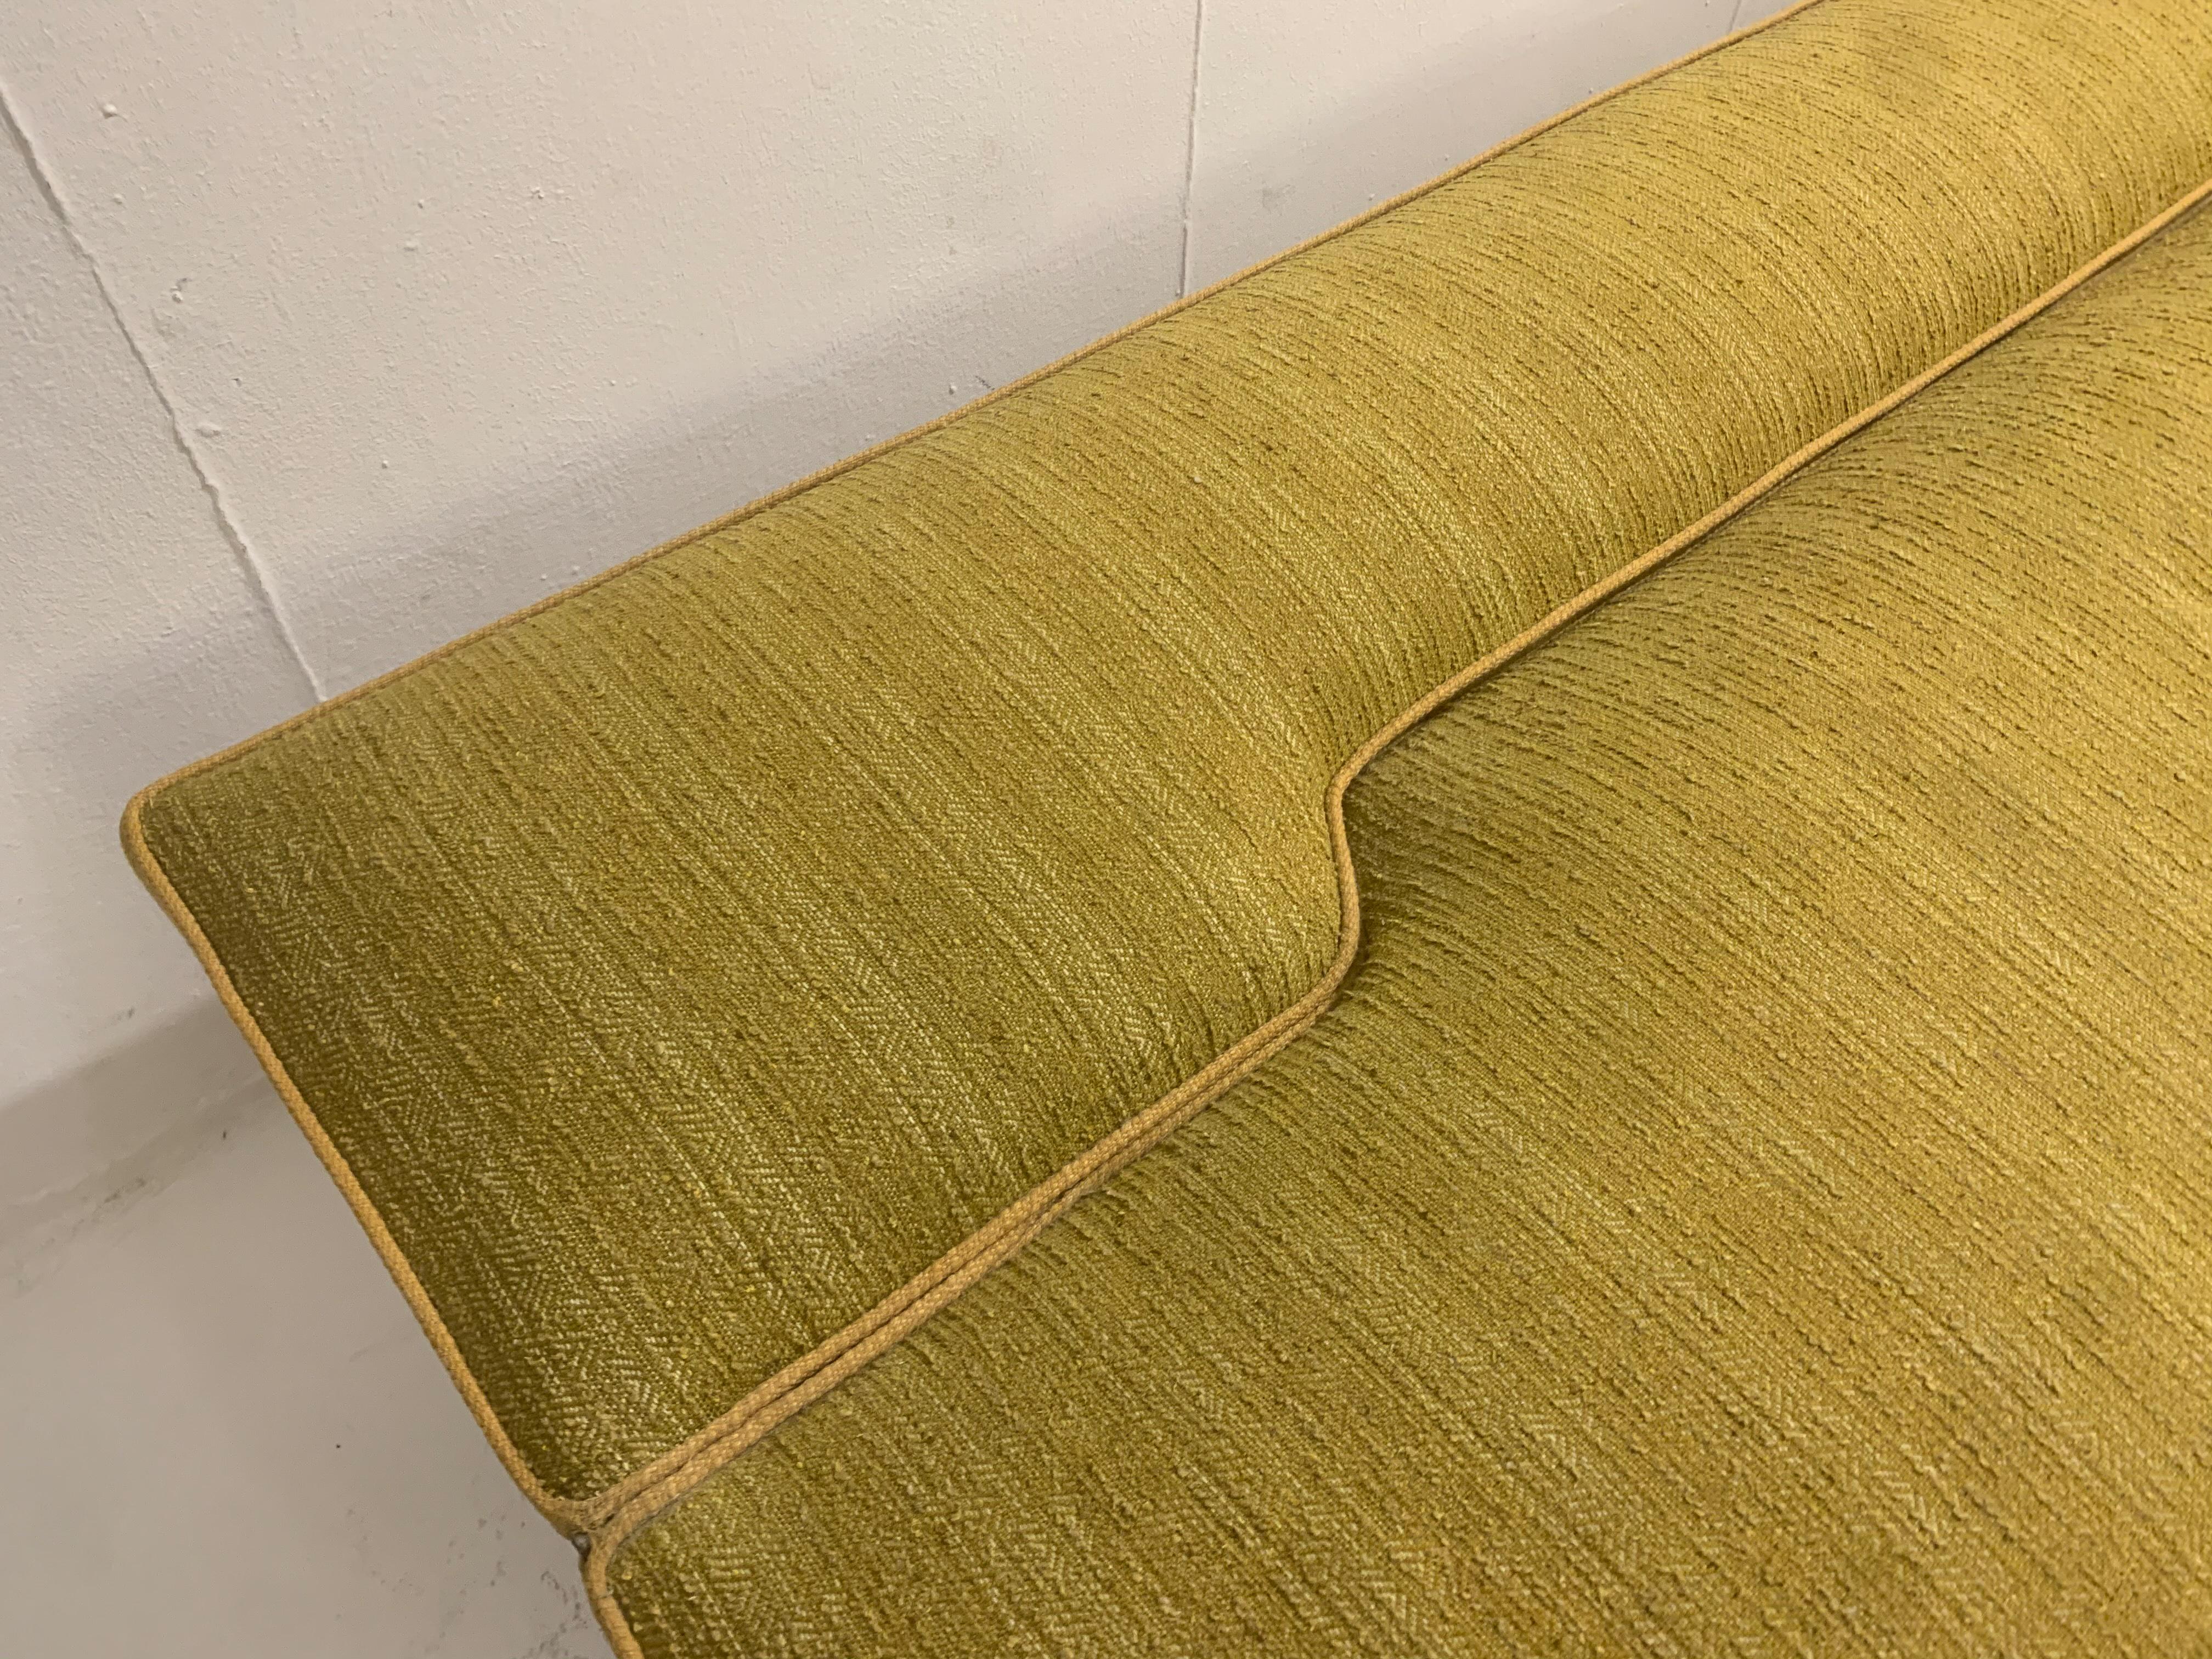 Mid-Century Modern Yellow Sofa Bed, Original Fabric by Miroslav Navratil 1960s

Depth when open : 87cm